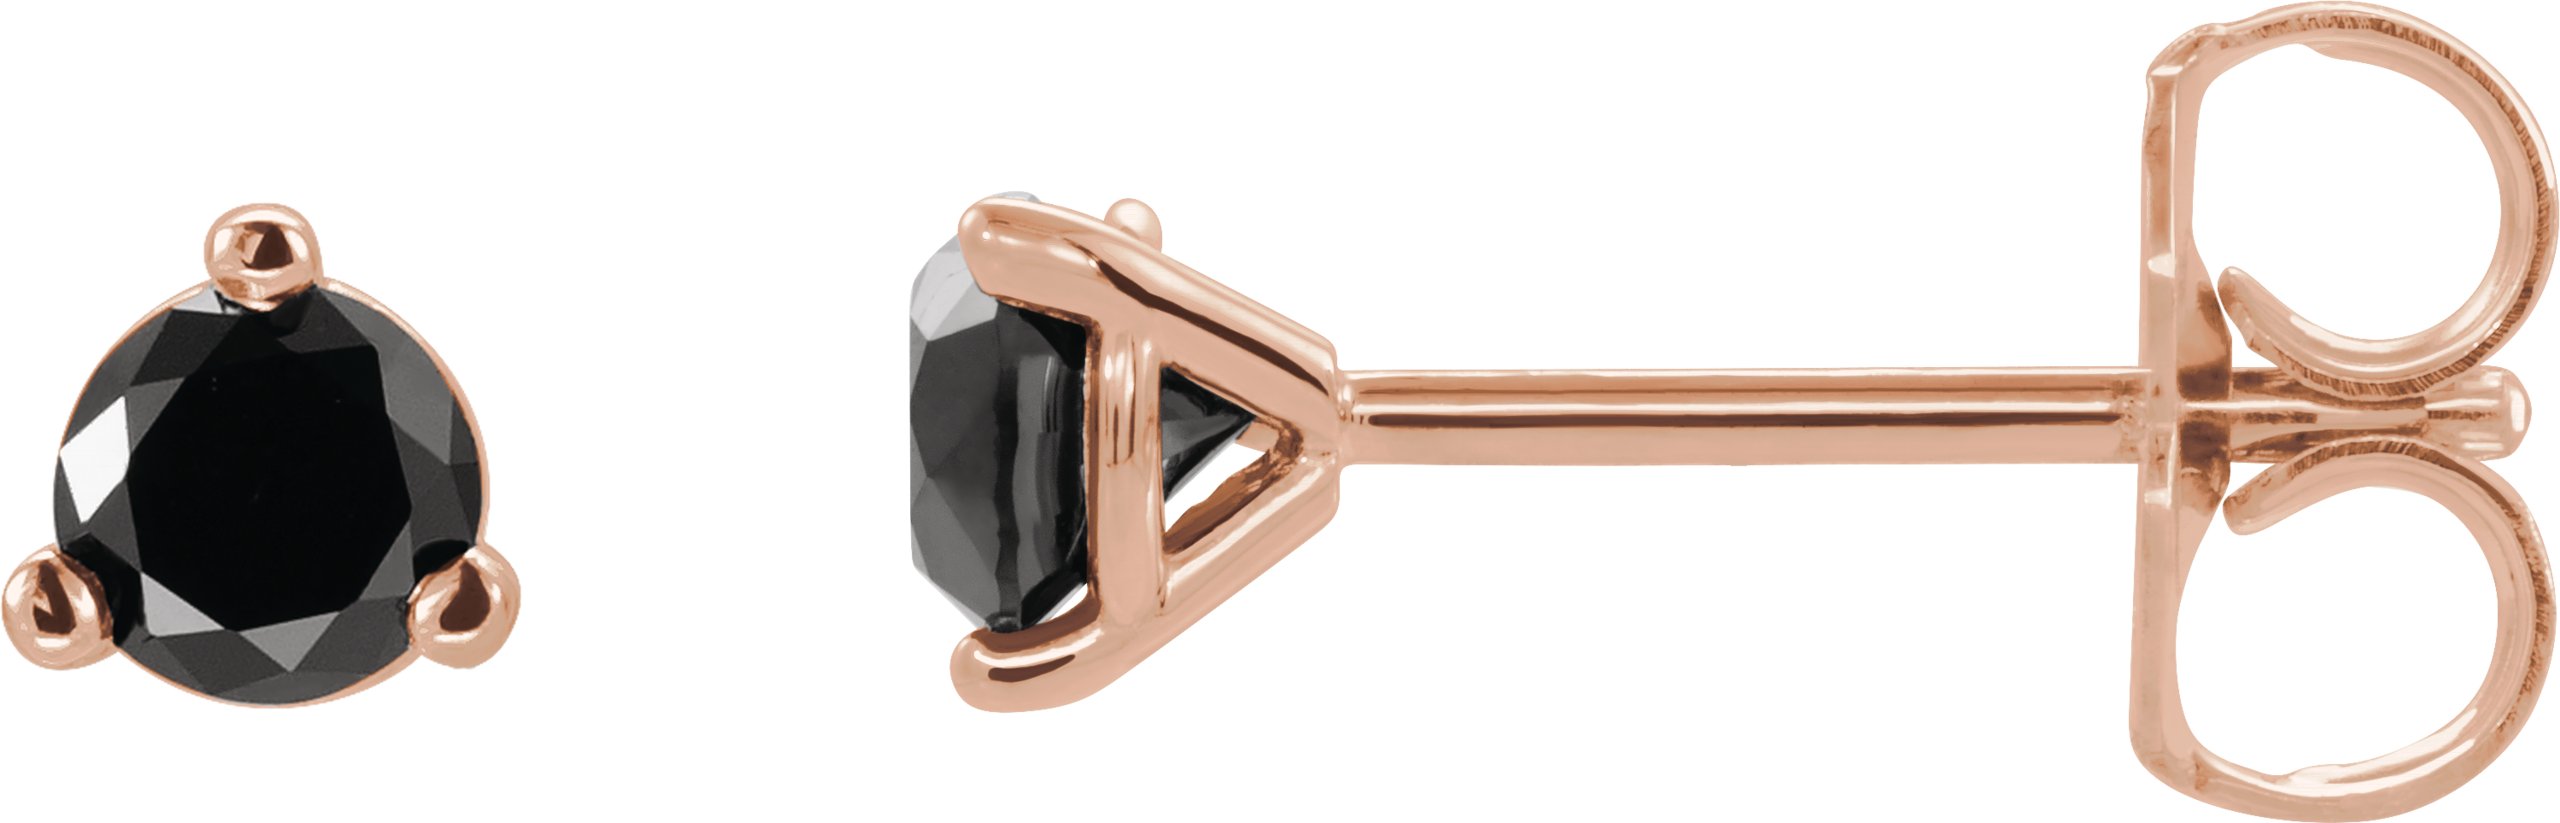 14K Rose 1 1/8 CTW Natural Black Diamond Earrings